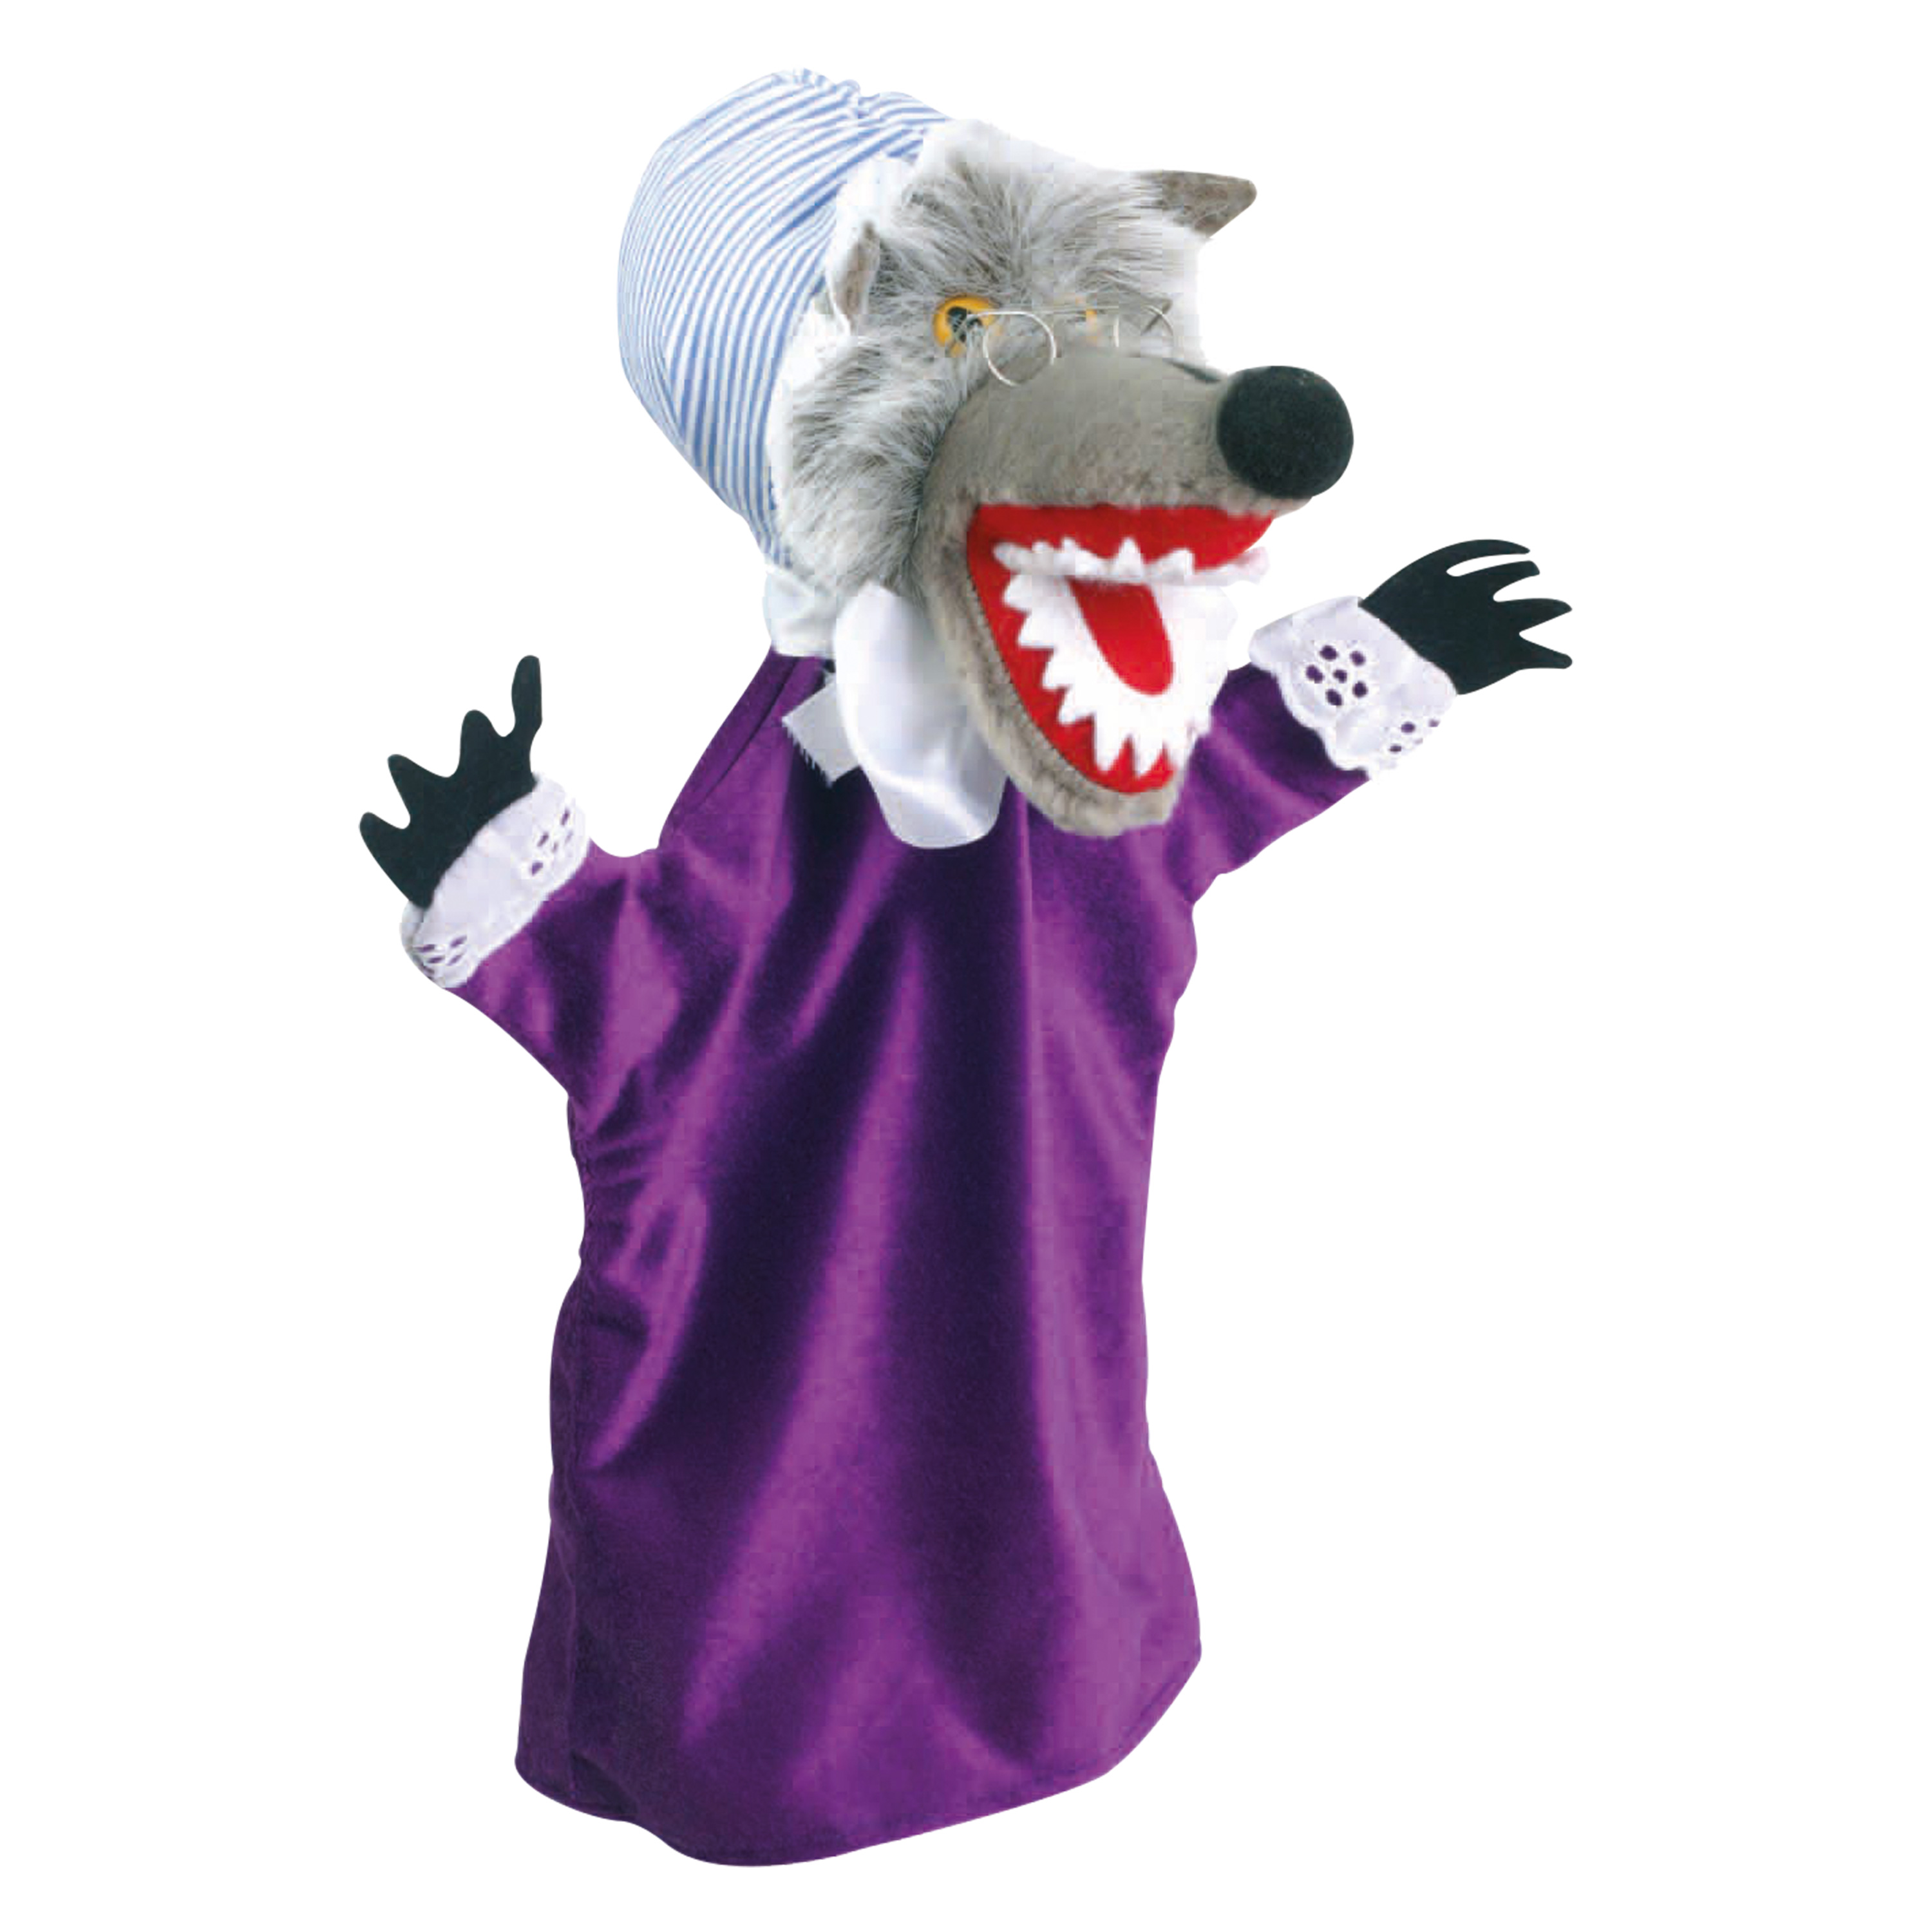 Kersa Handspielpuppe 'Wolf verkleidet'